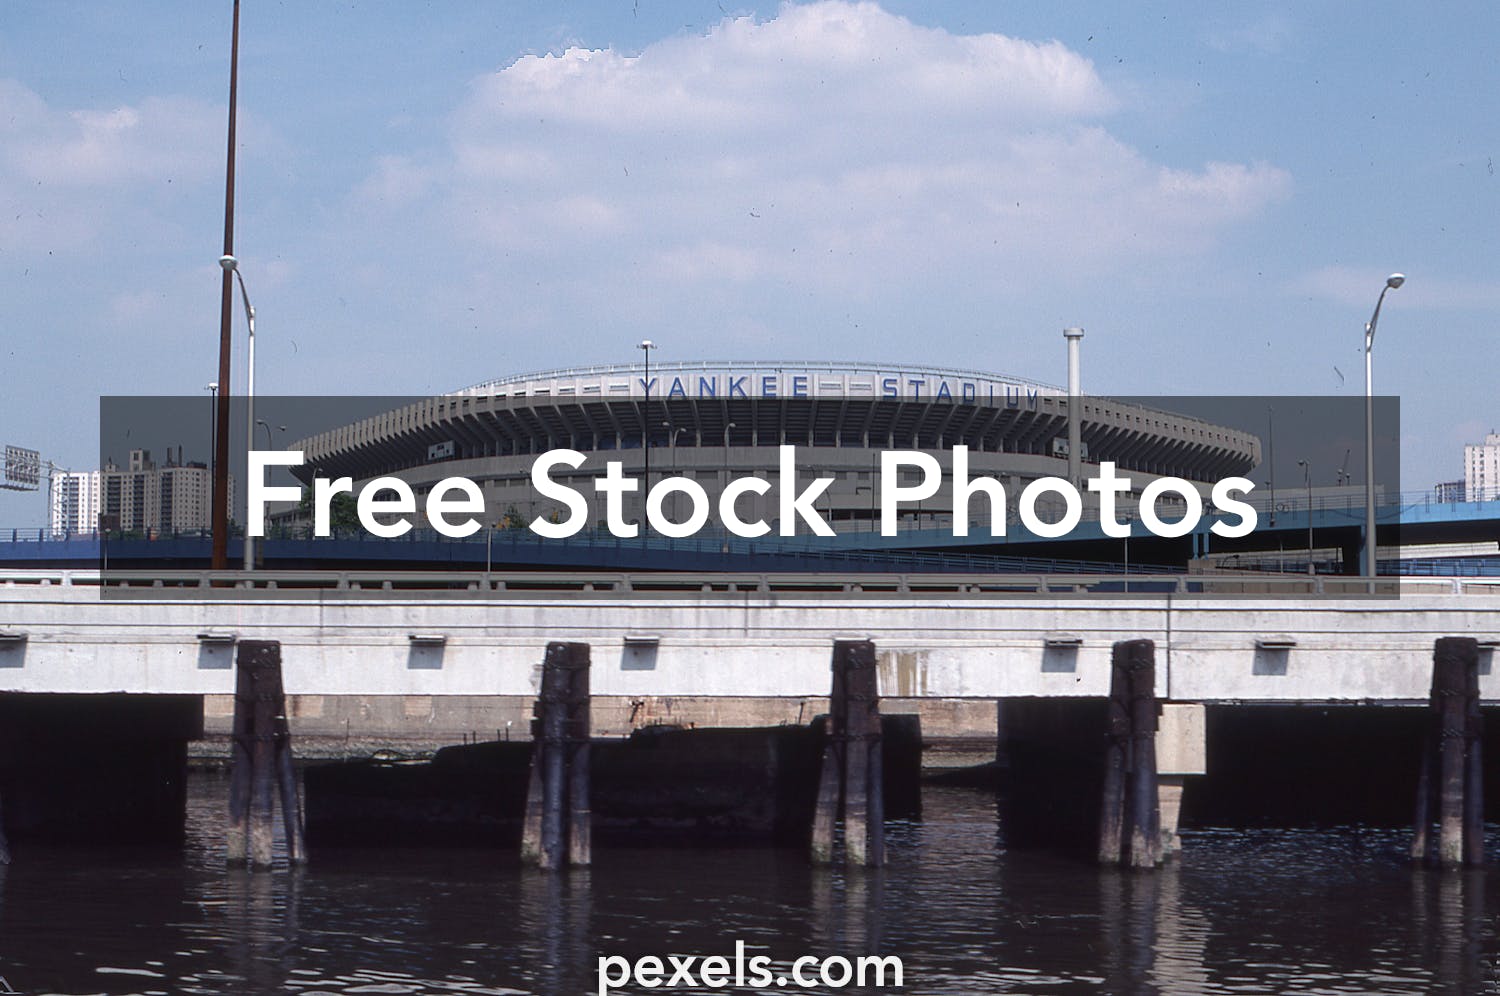 Yankee Stadium Night Stock Photos - Free & Royalty-Free Stock